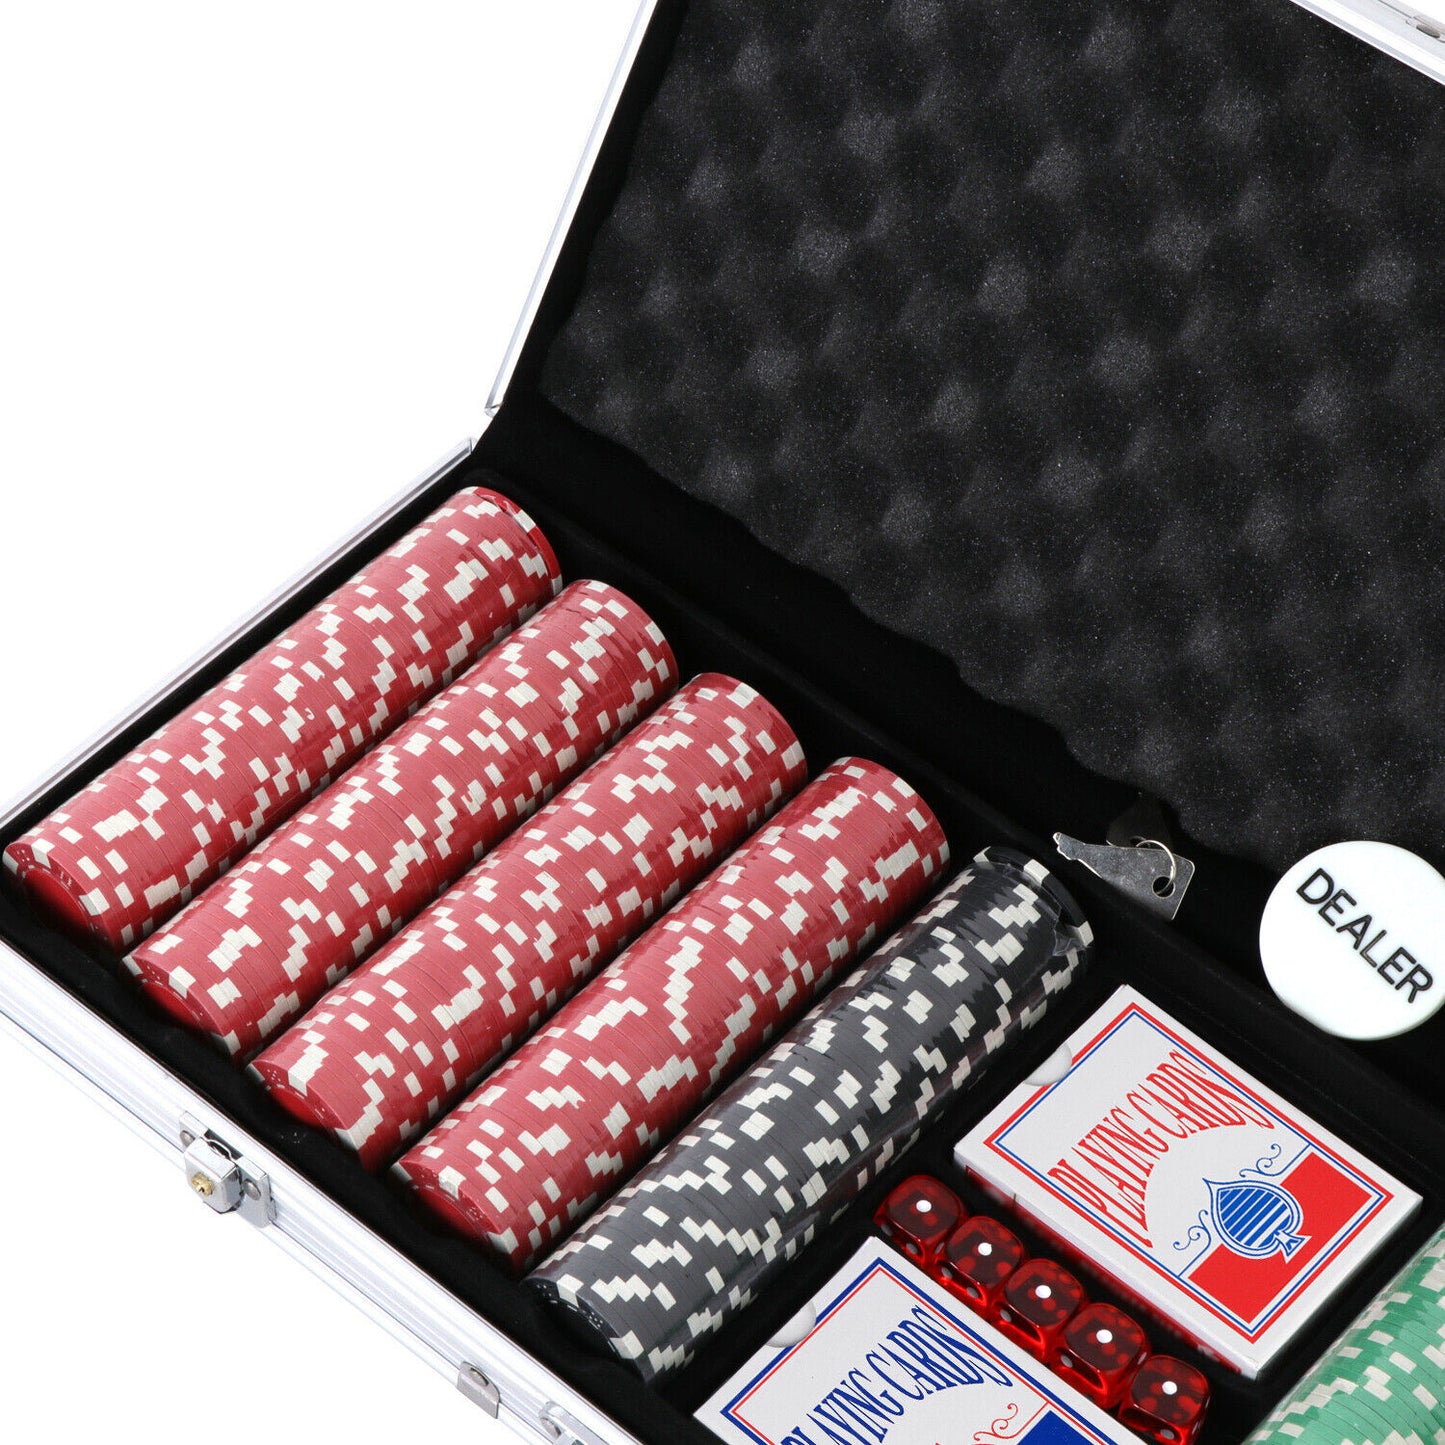 500PCS Chips Poker Dice Chip Texas Blackjack Cards Game Aluminum Case Portable